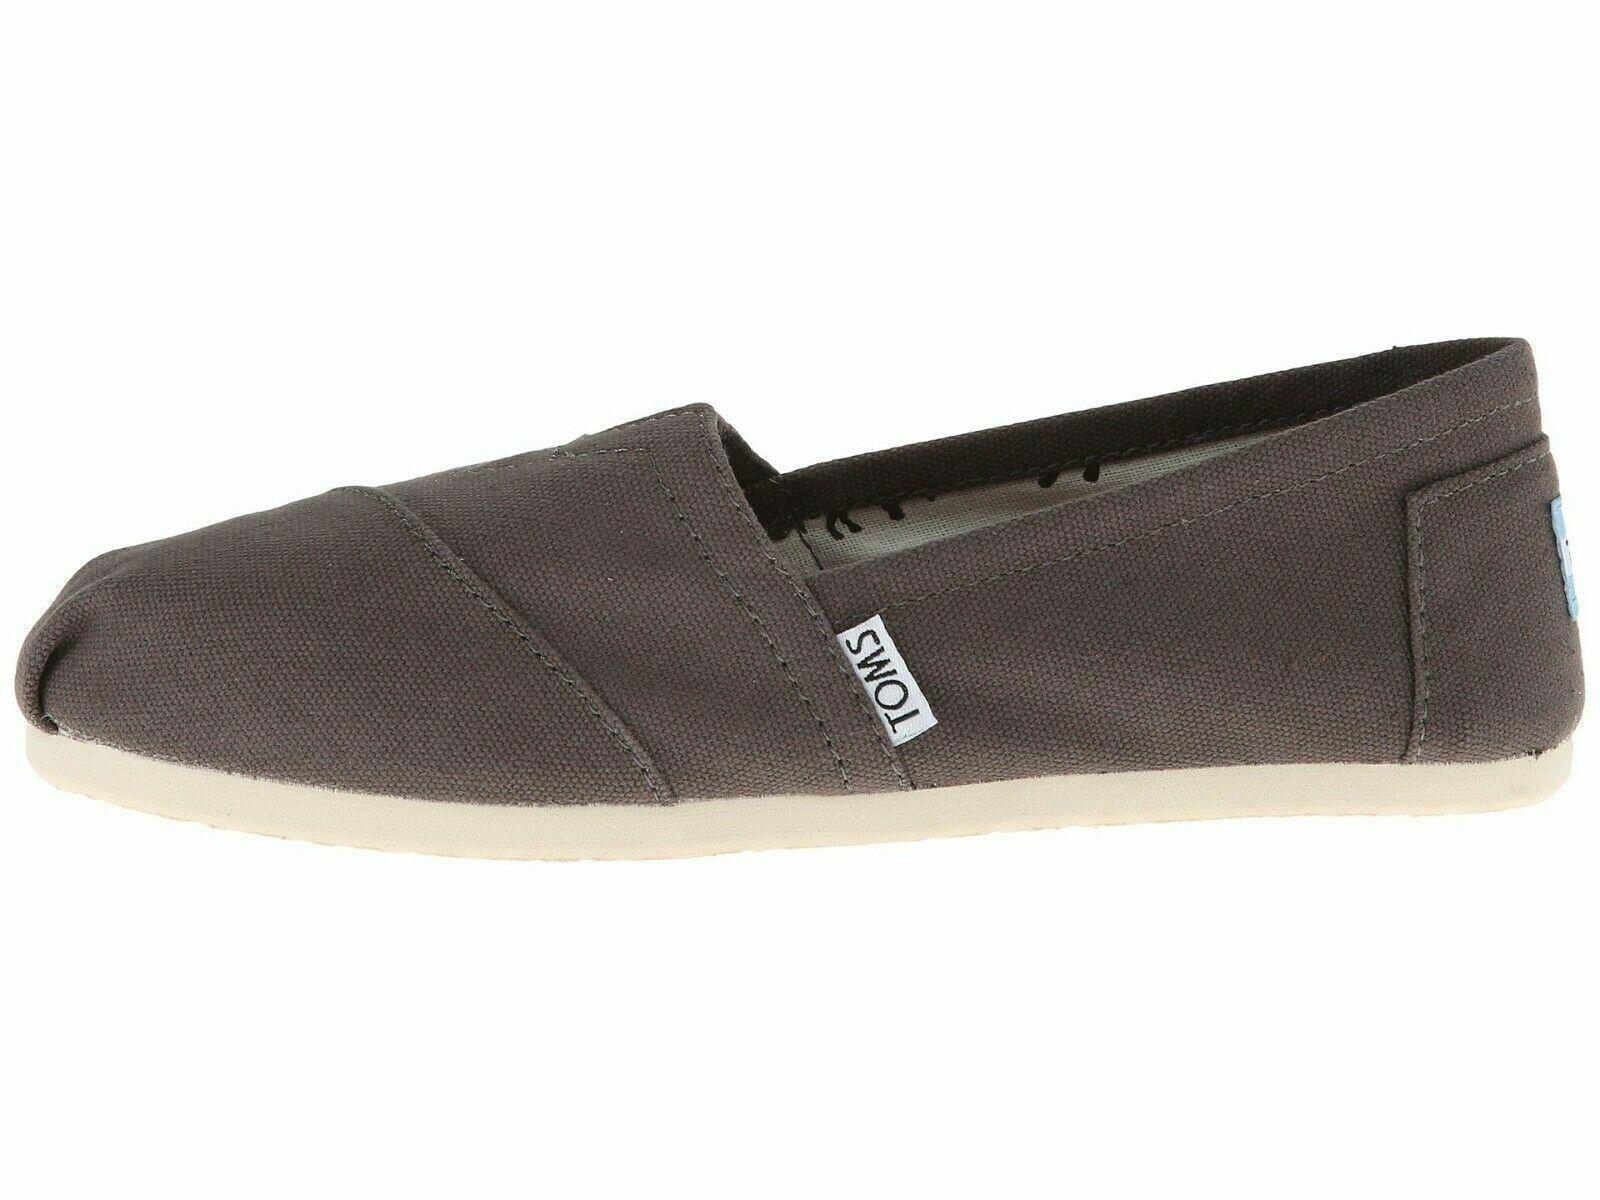 TOMS Womens Alpargata Classic Ash Canvas Sneaker Shoes Espadrilles - Grey - US 5